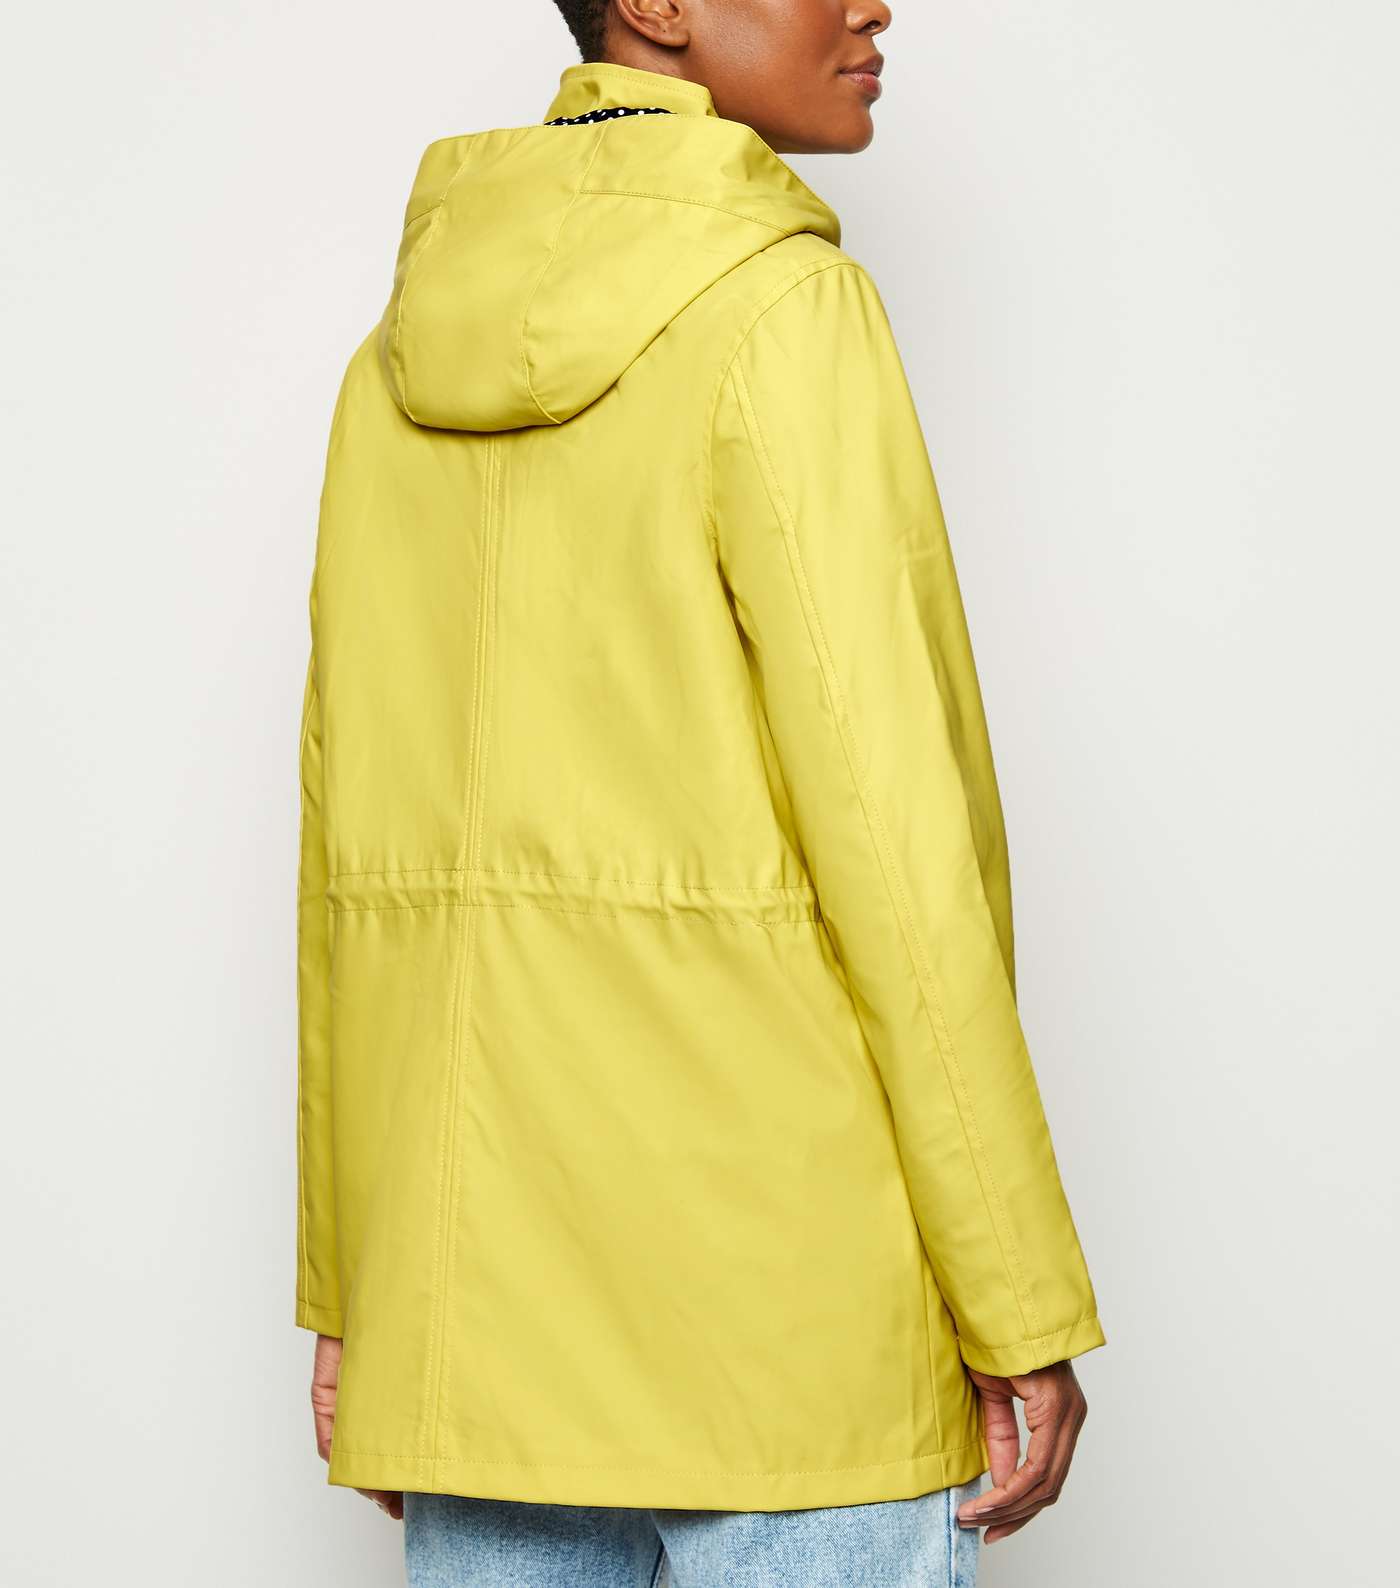 Urban Bliss Yellow Spot Hooded Jacket Image 5